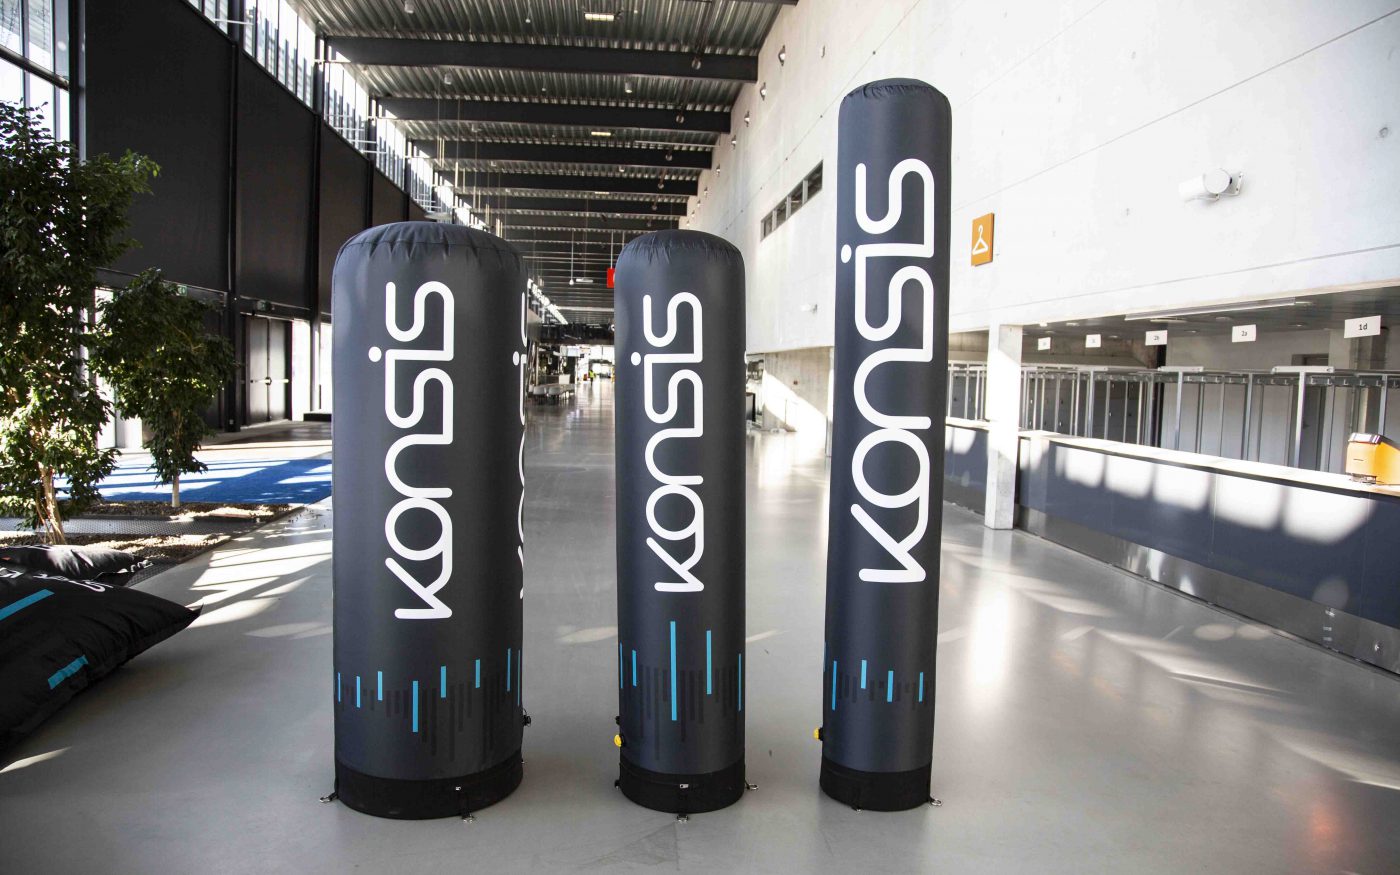 Oppblåsbare påler/pilarer/reklamesøyler med logoen til Konsis på.